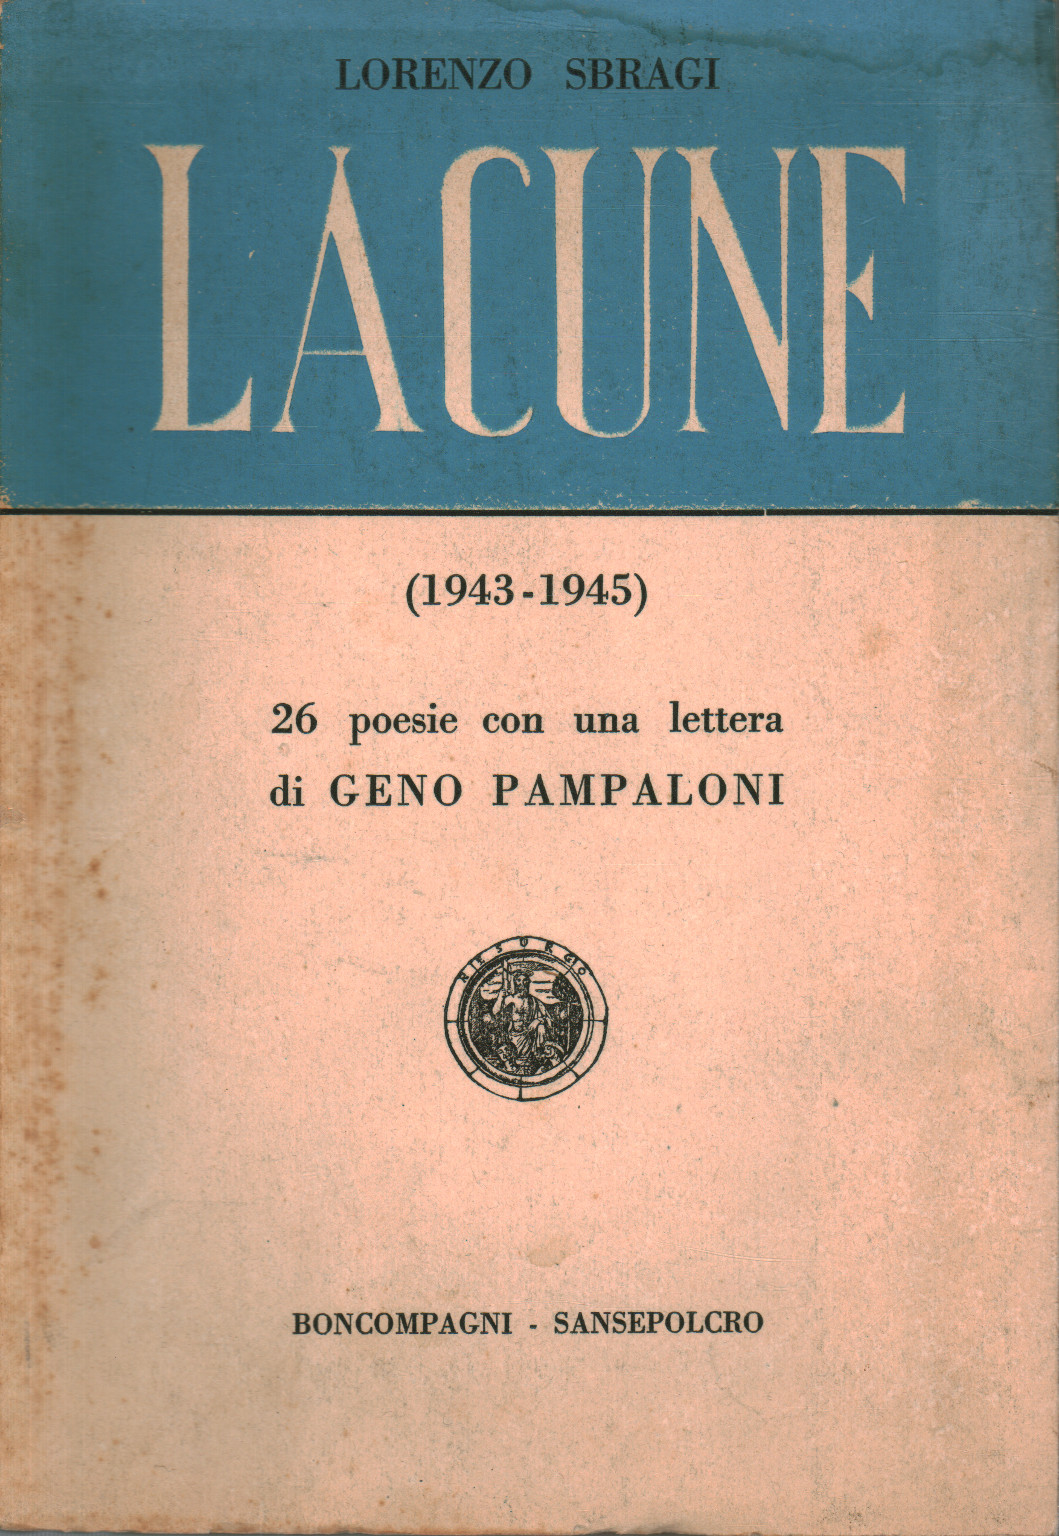 Lücken (1943-1945), Lorenzo Sbragi